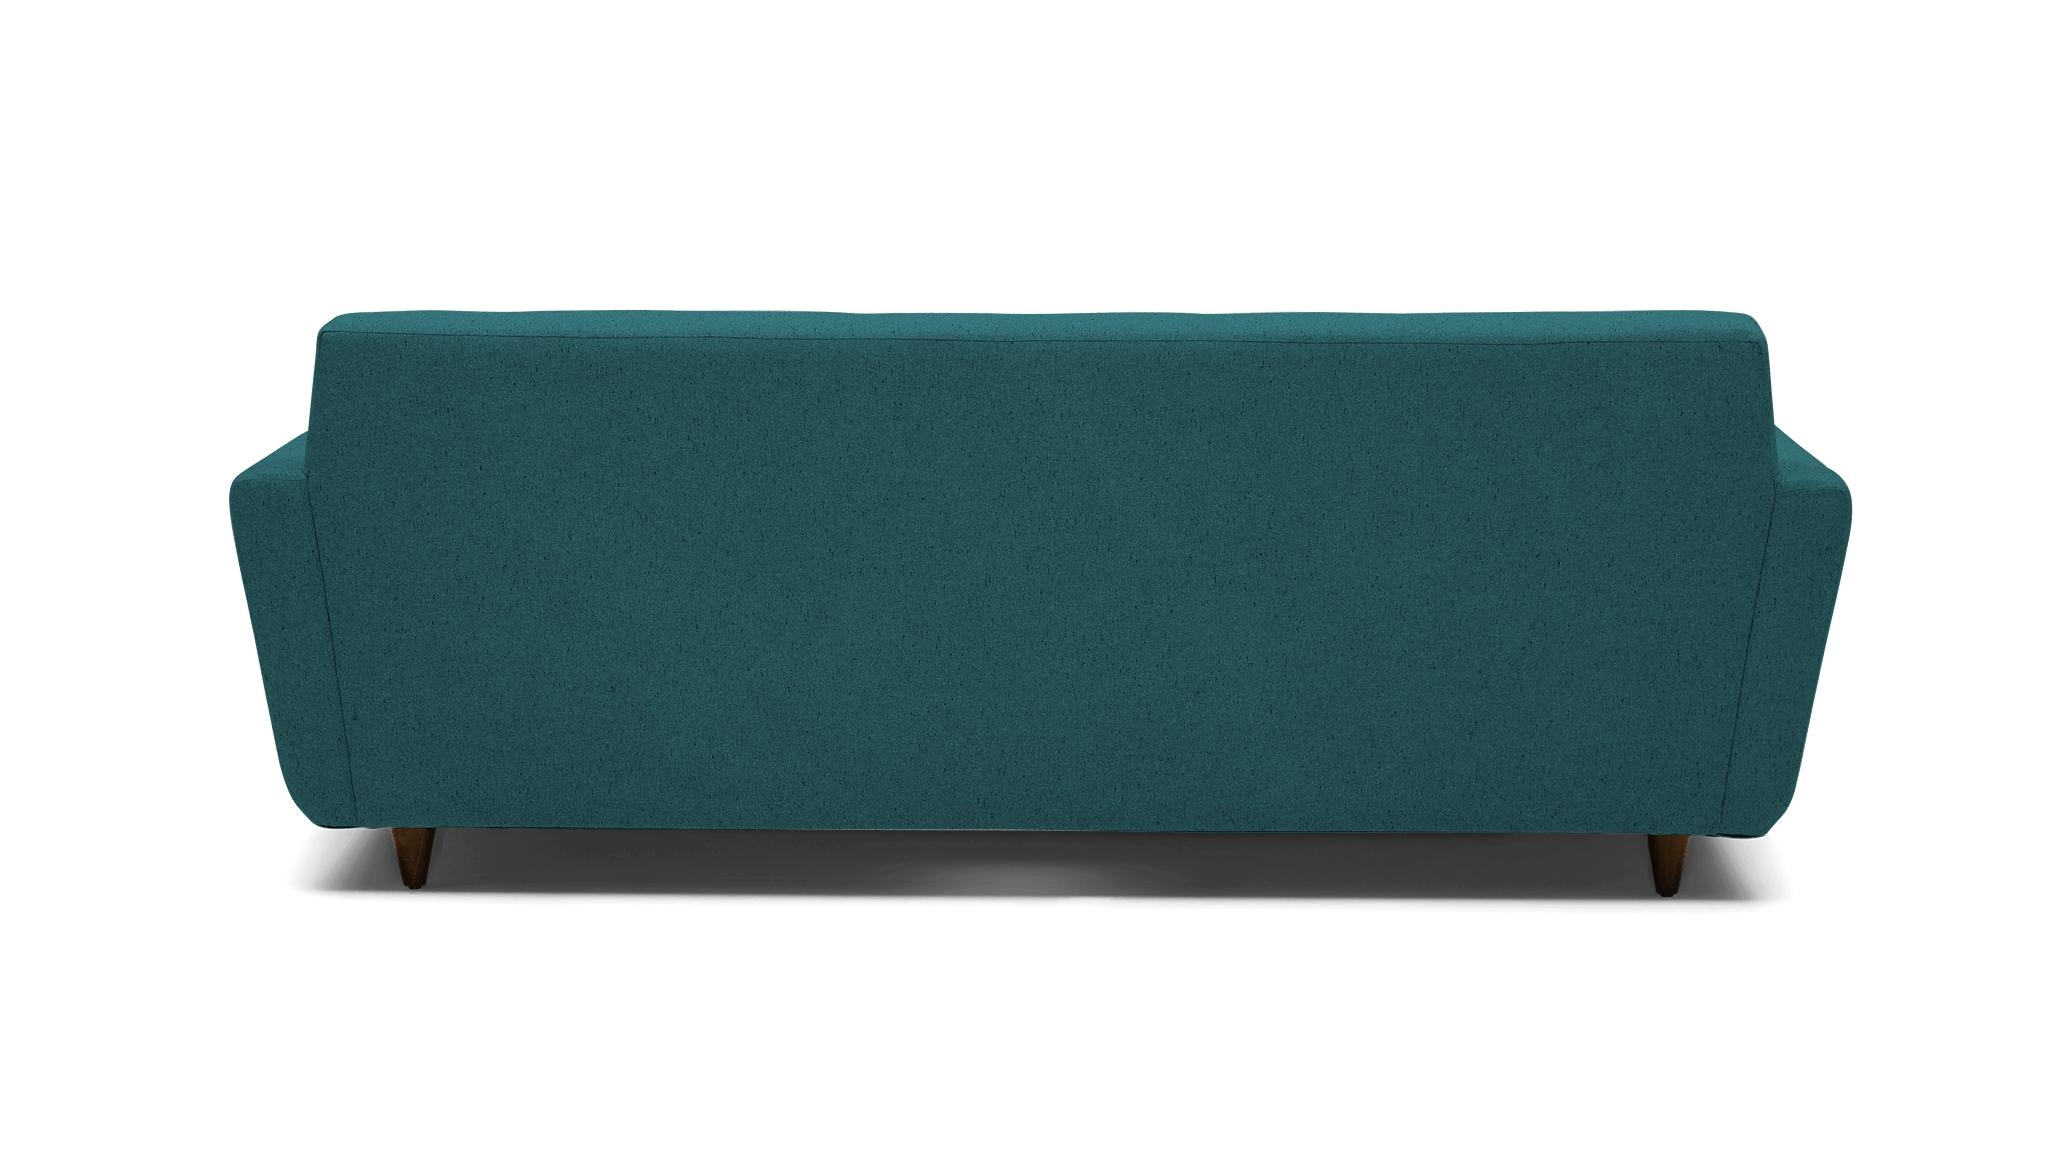 Blue Hughes Mid Century Modern Sleeper Sofa - Royale Peacock  - Mocha - Image 4